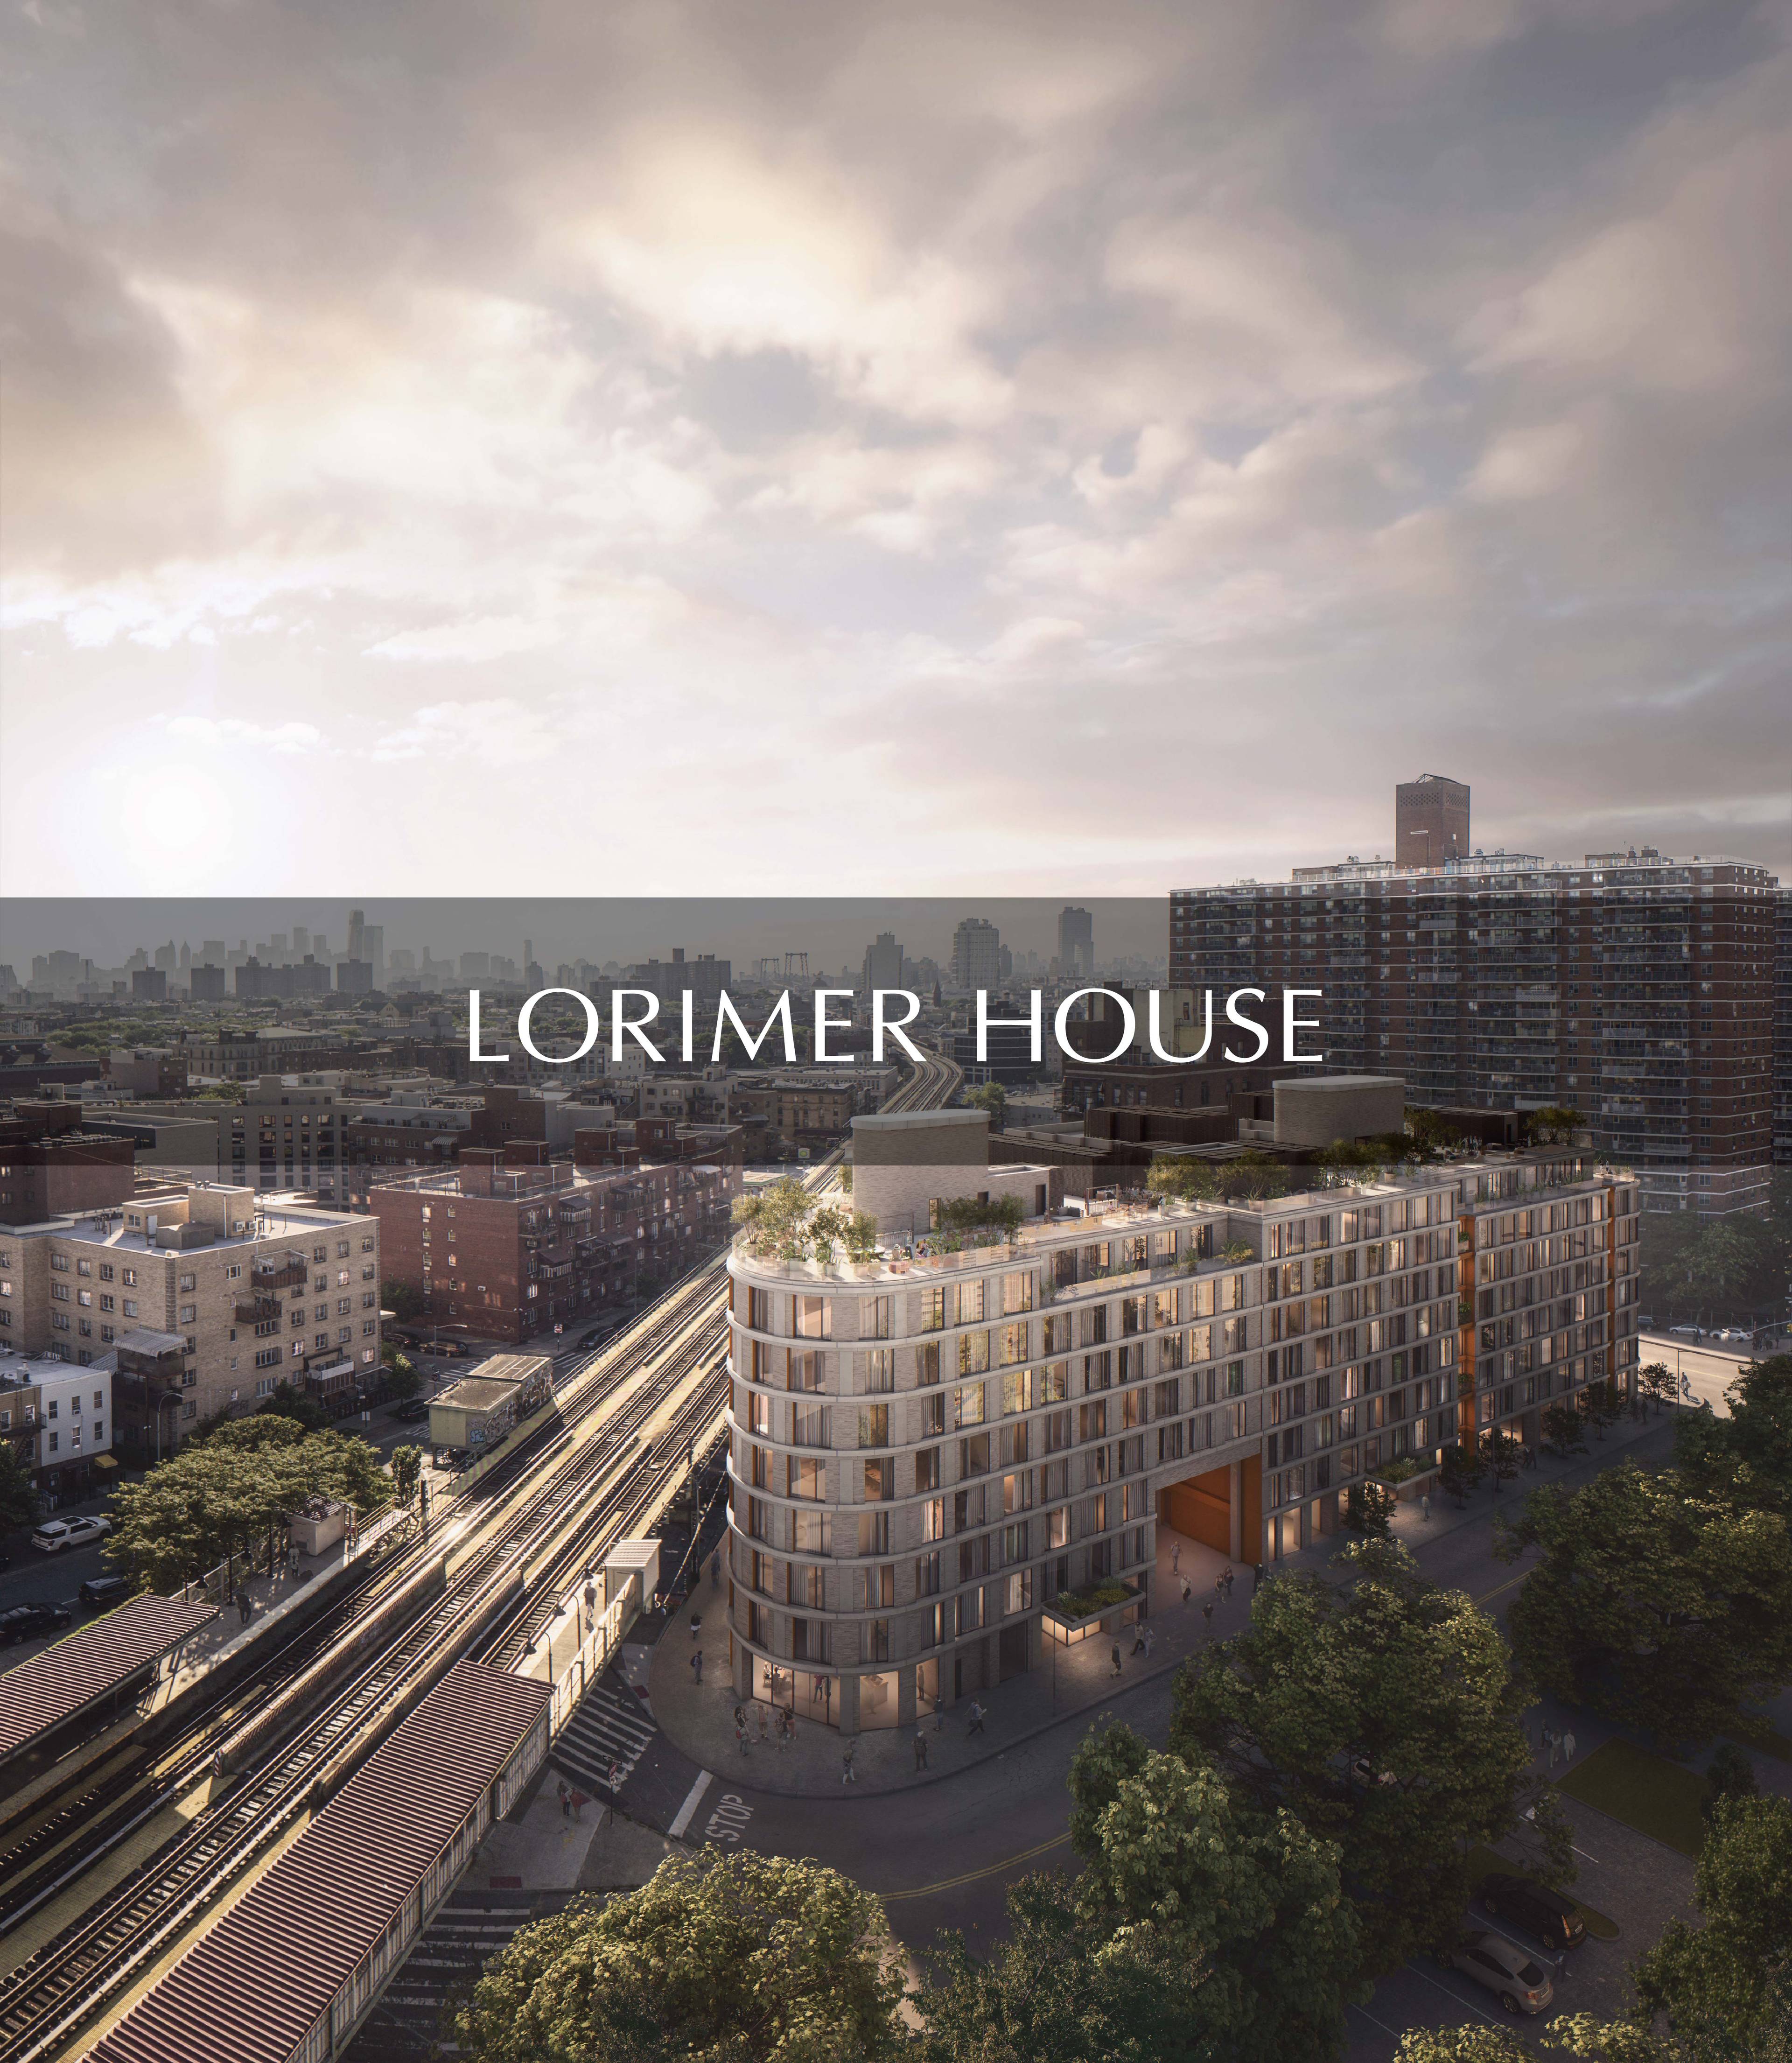 Lorimer House